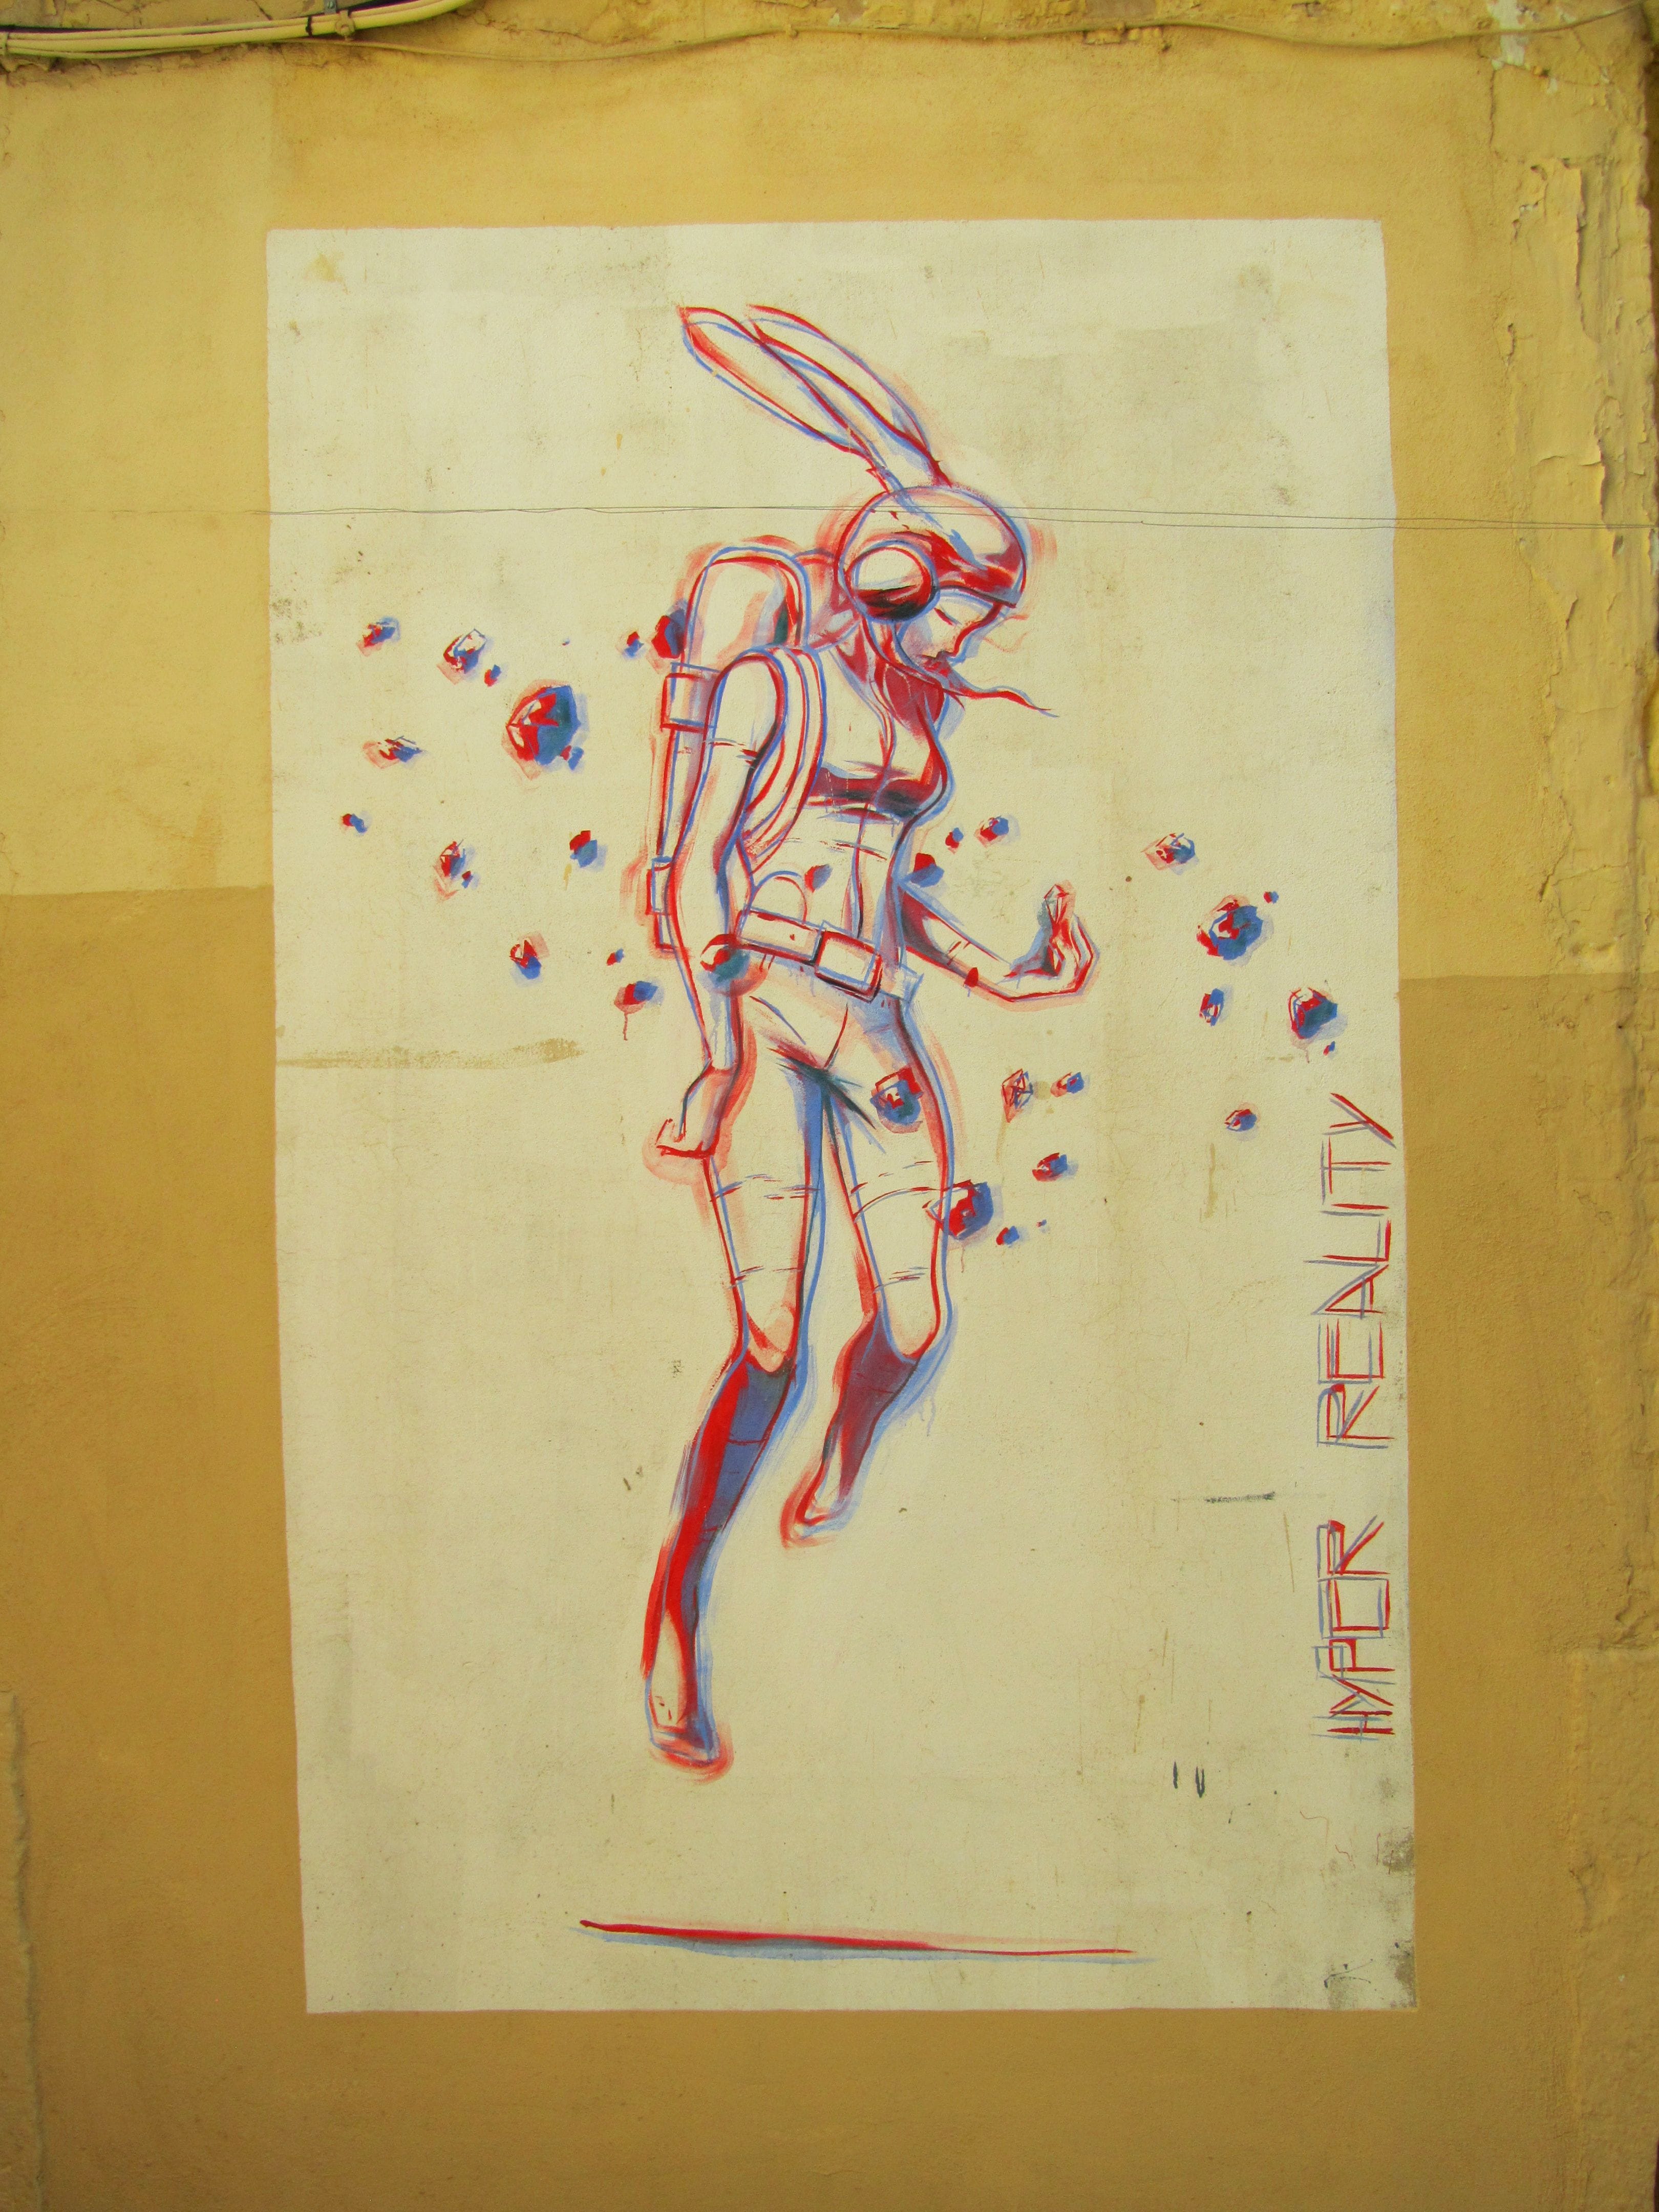 Graffiti 4801  by the artist Deih xlf captured by elettrotajik in València Spain